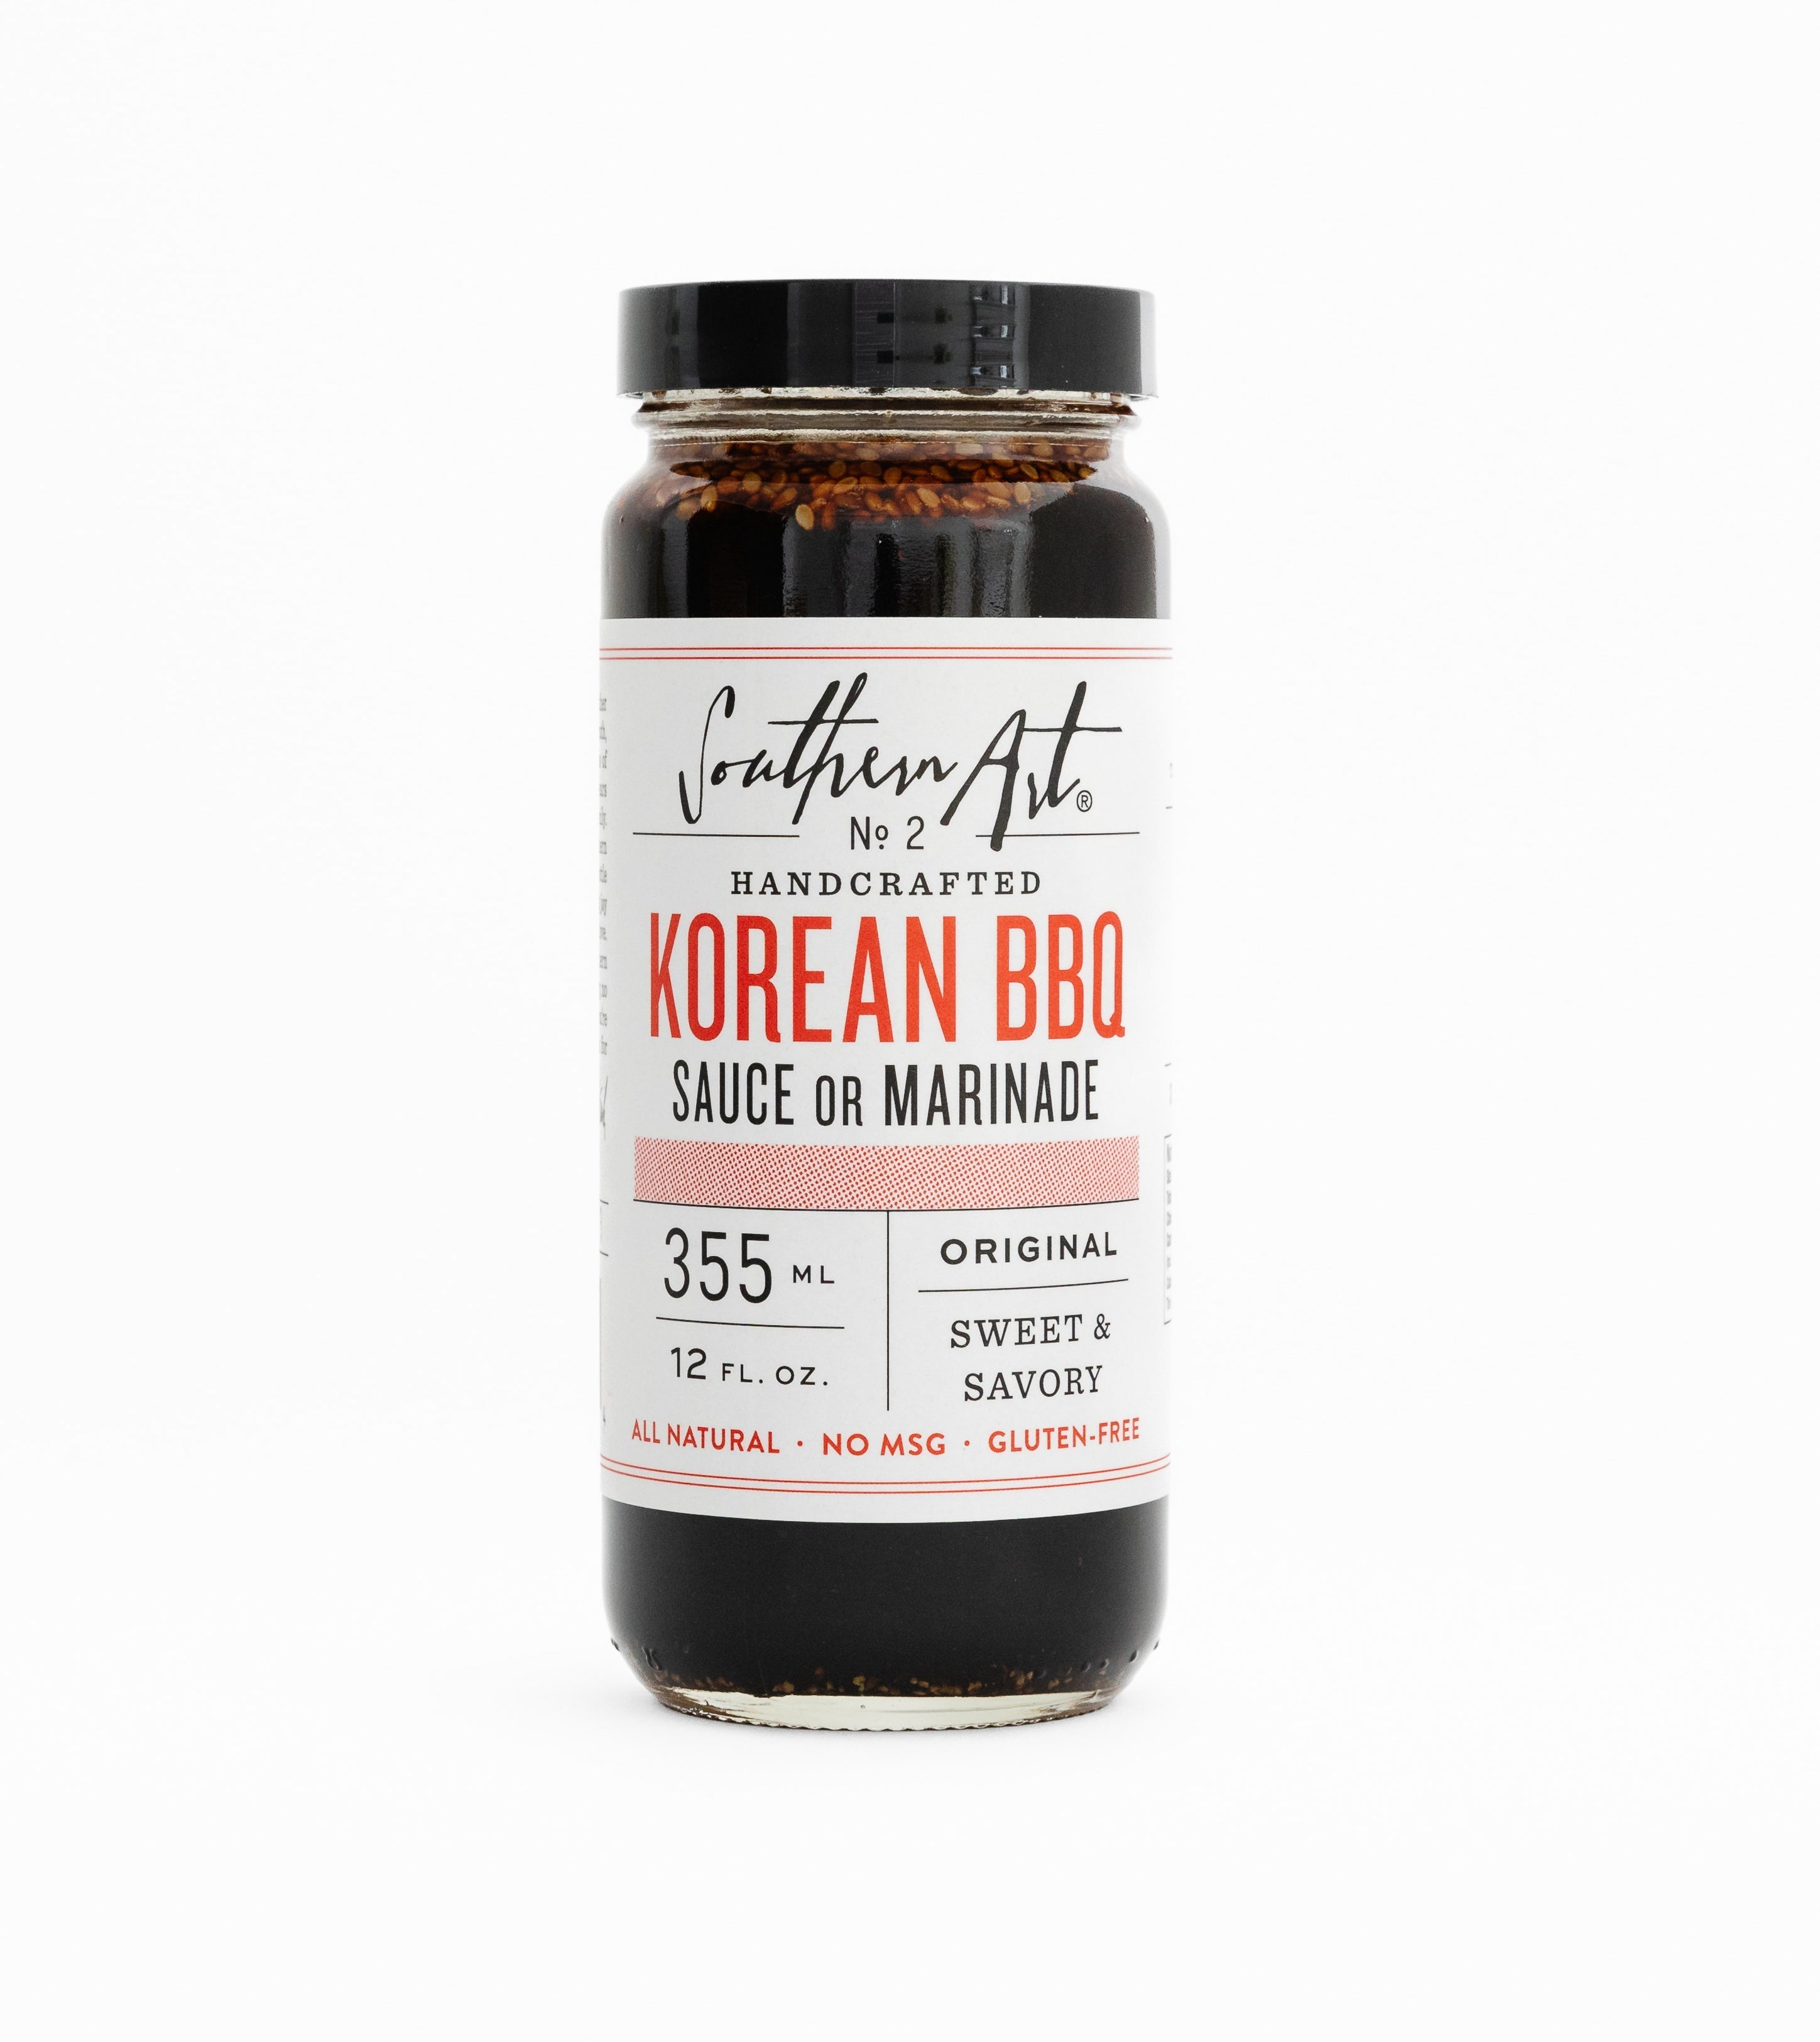 Original Korean BBQ Sauce